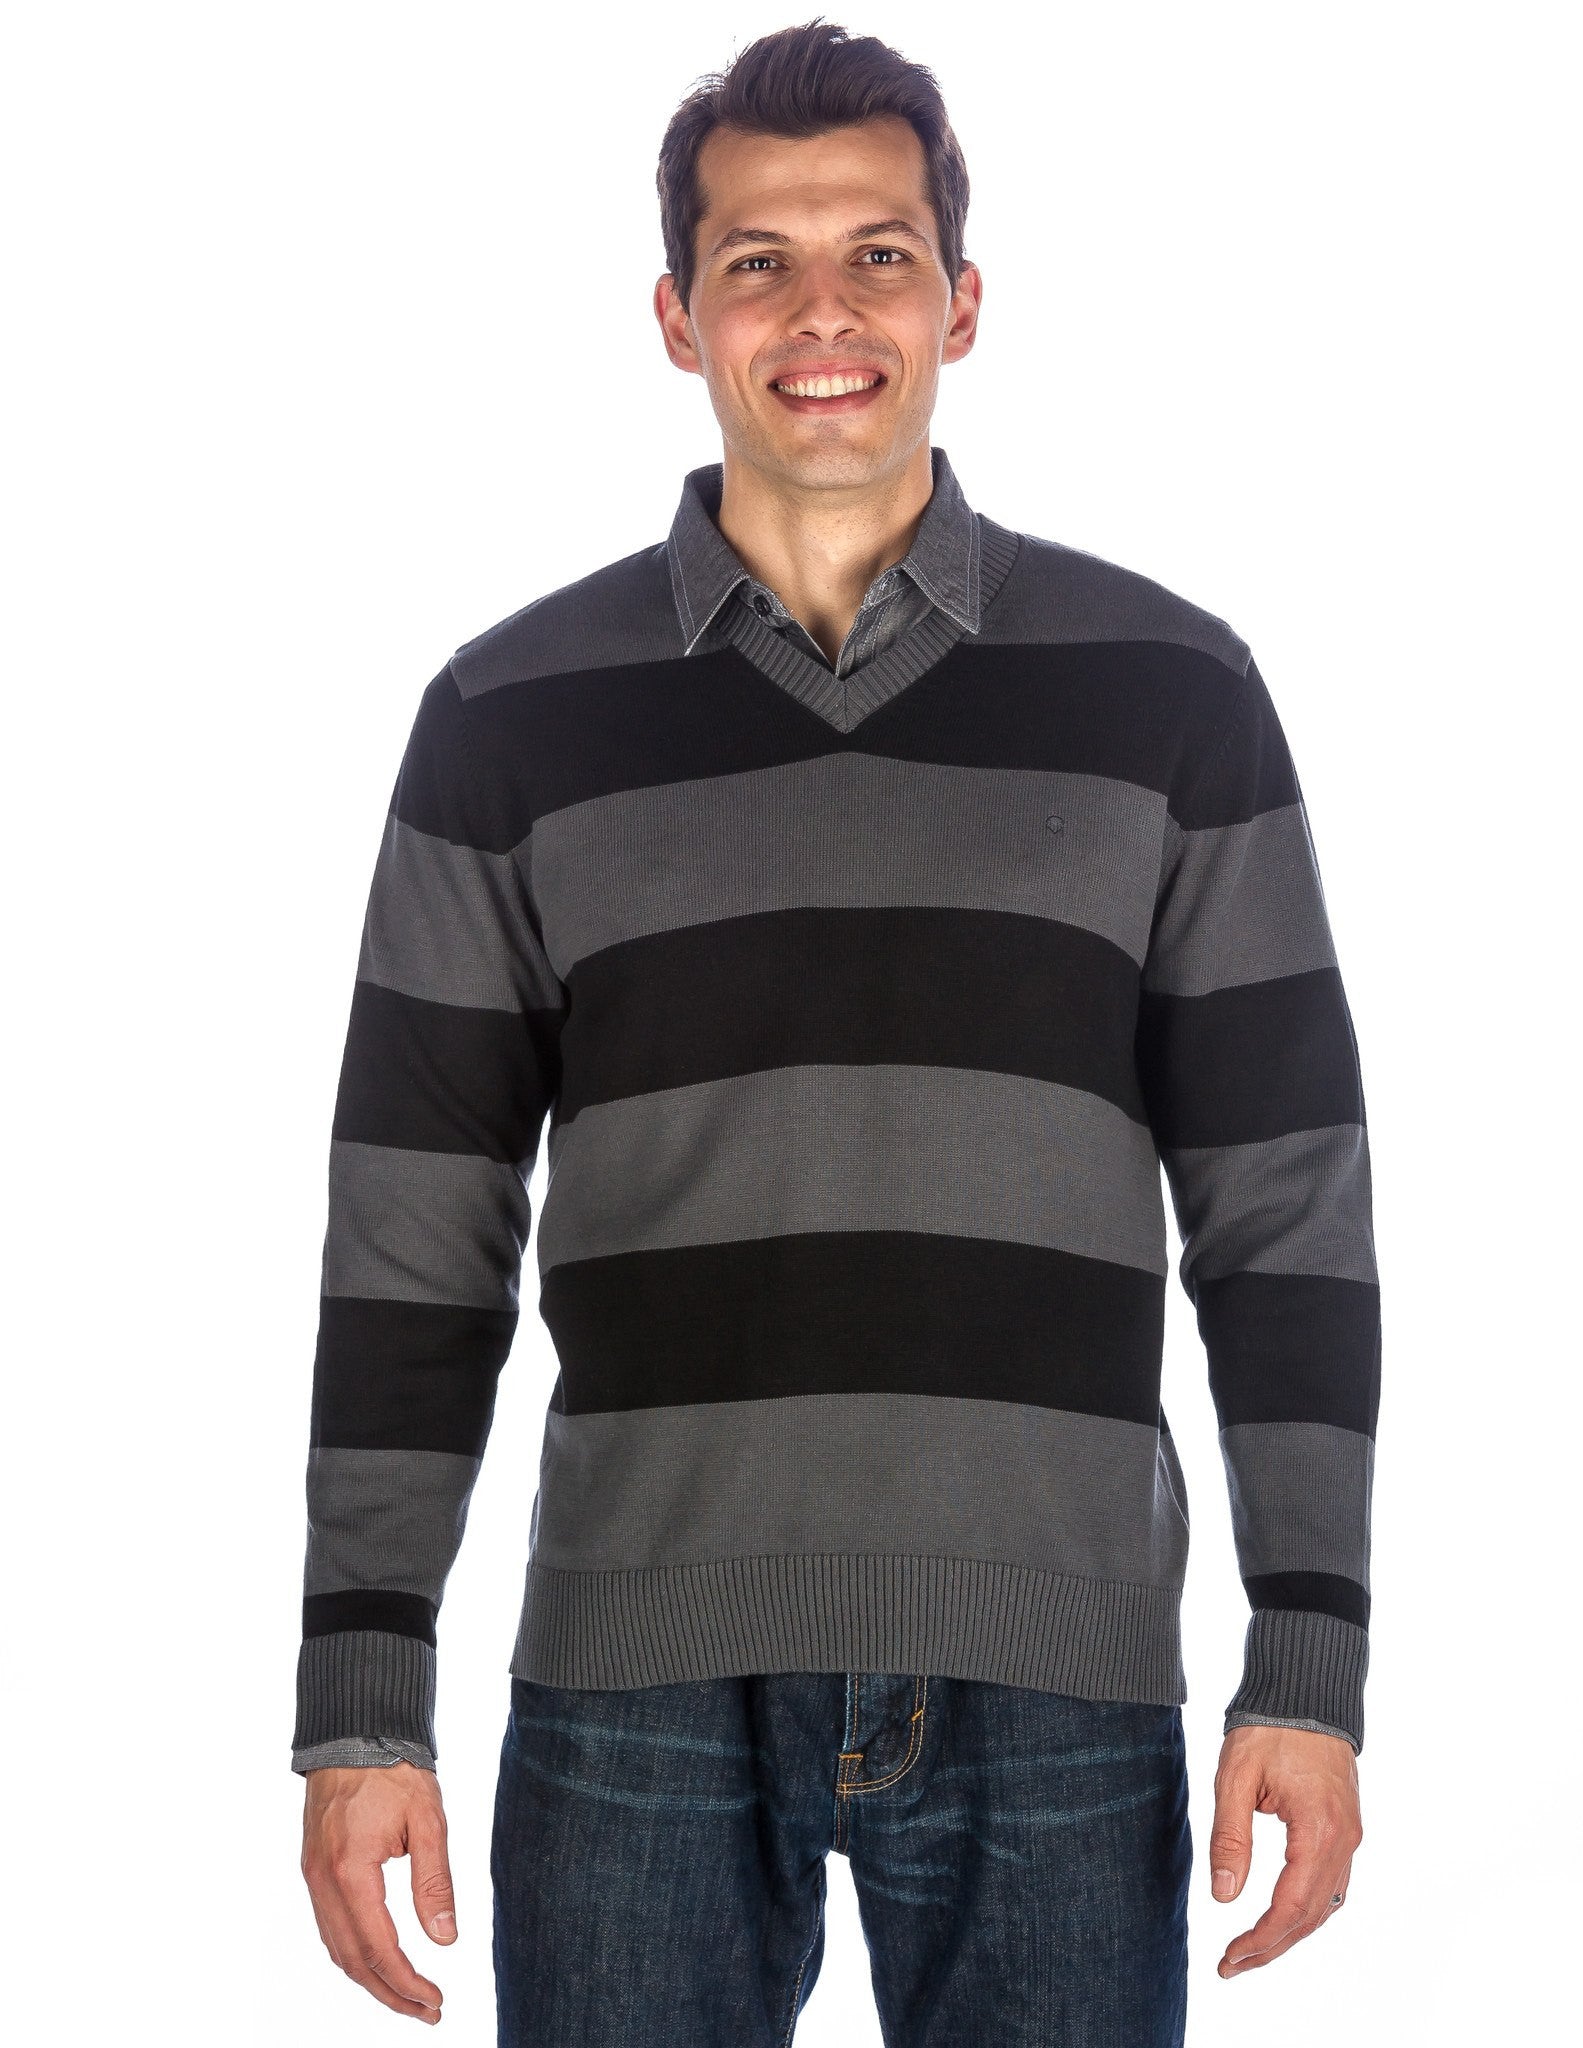 Men's 100% Cotton V-Neck Essential Sweater